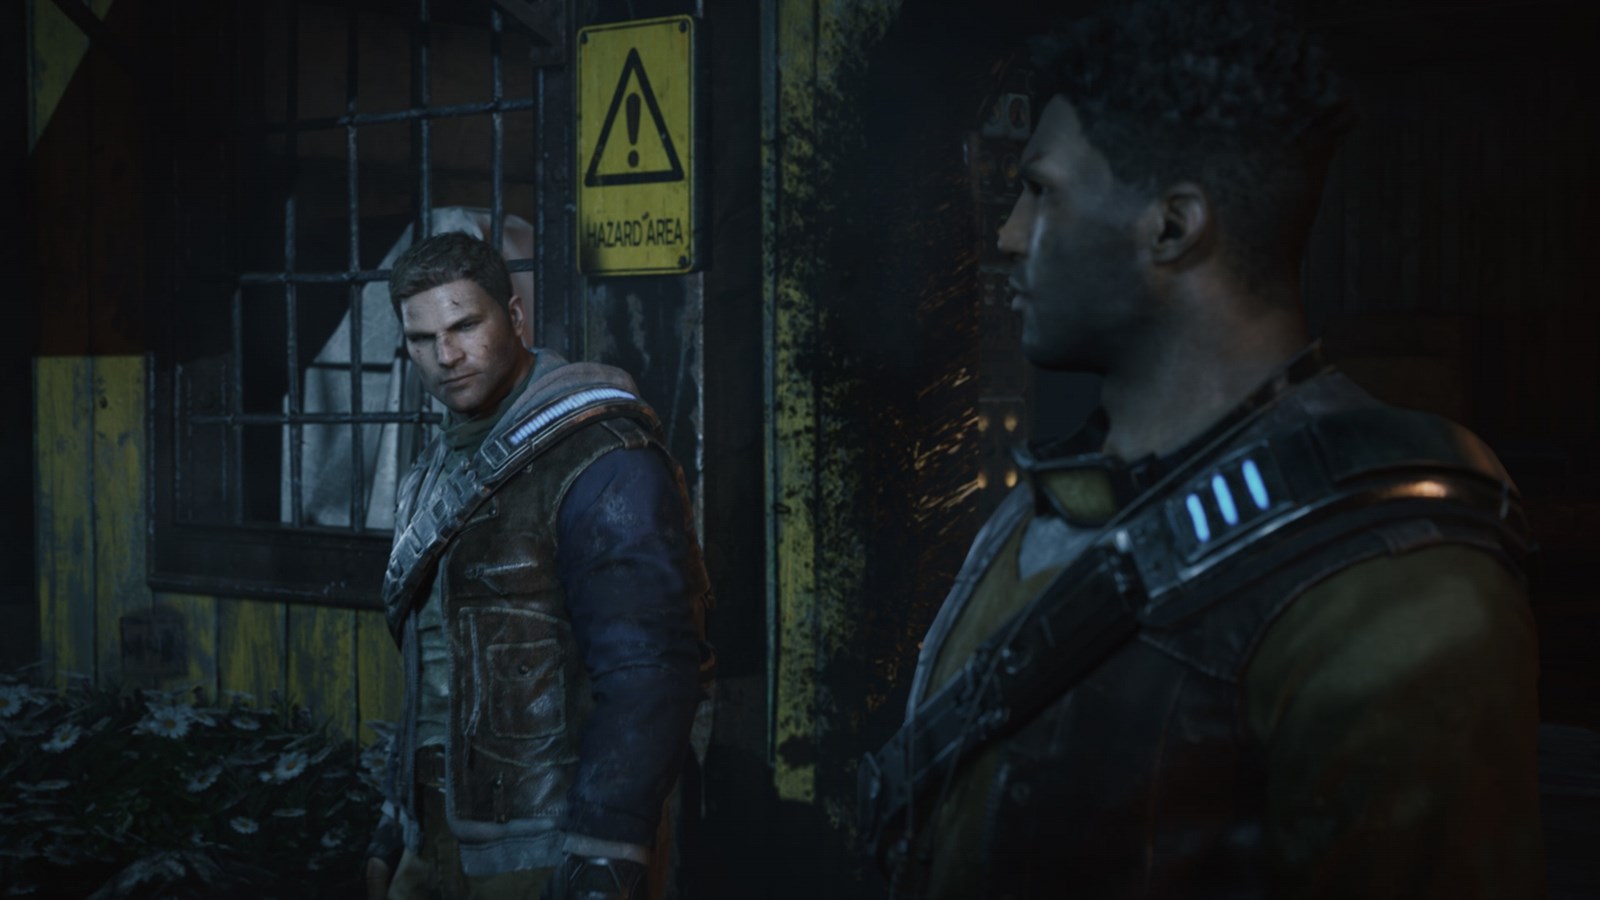 Gears of War 3 and Judgment get fixes for broken Xbox achievements